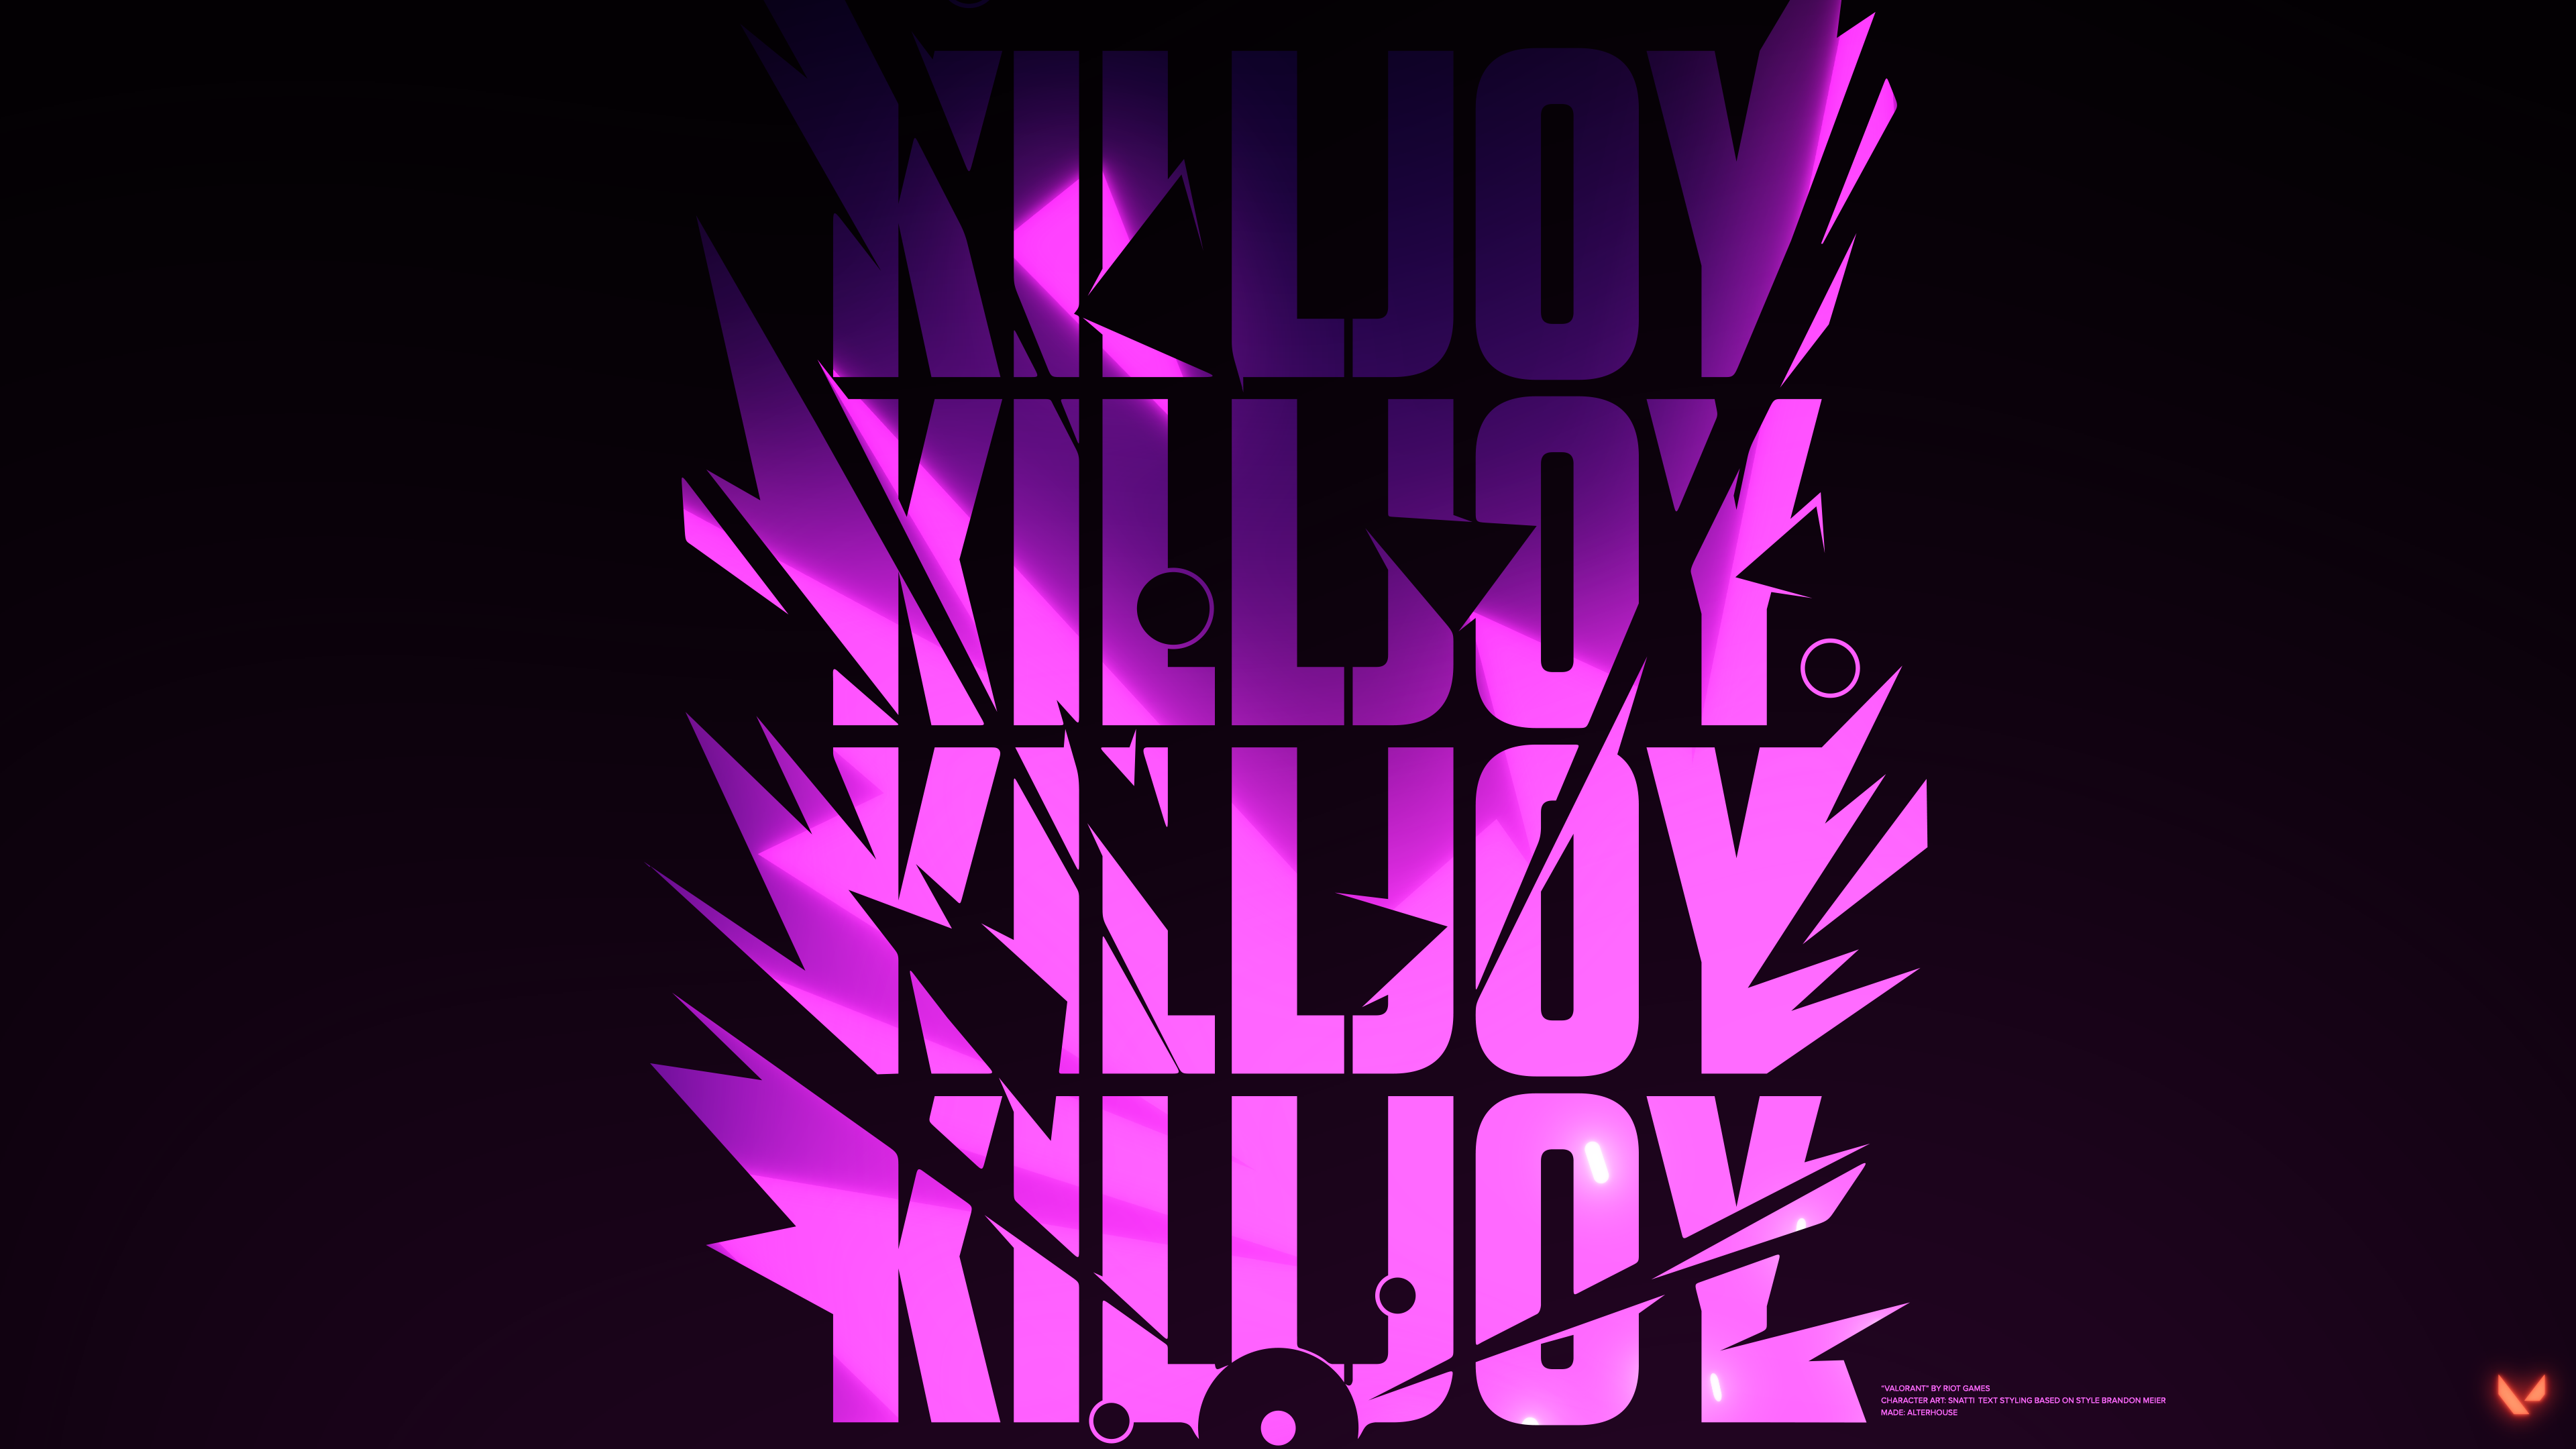 KillJoy 4k Wallpaper Valorant .imgur.com